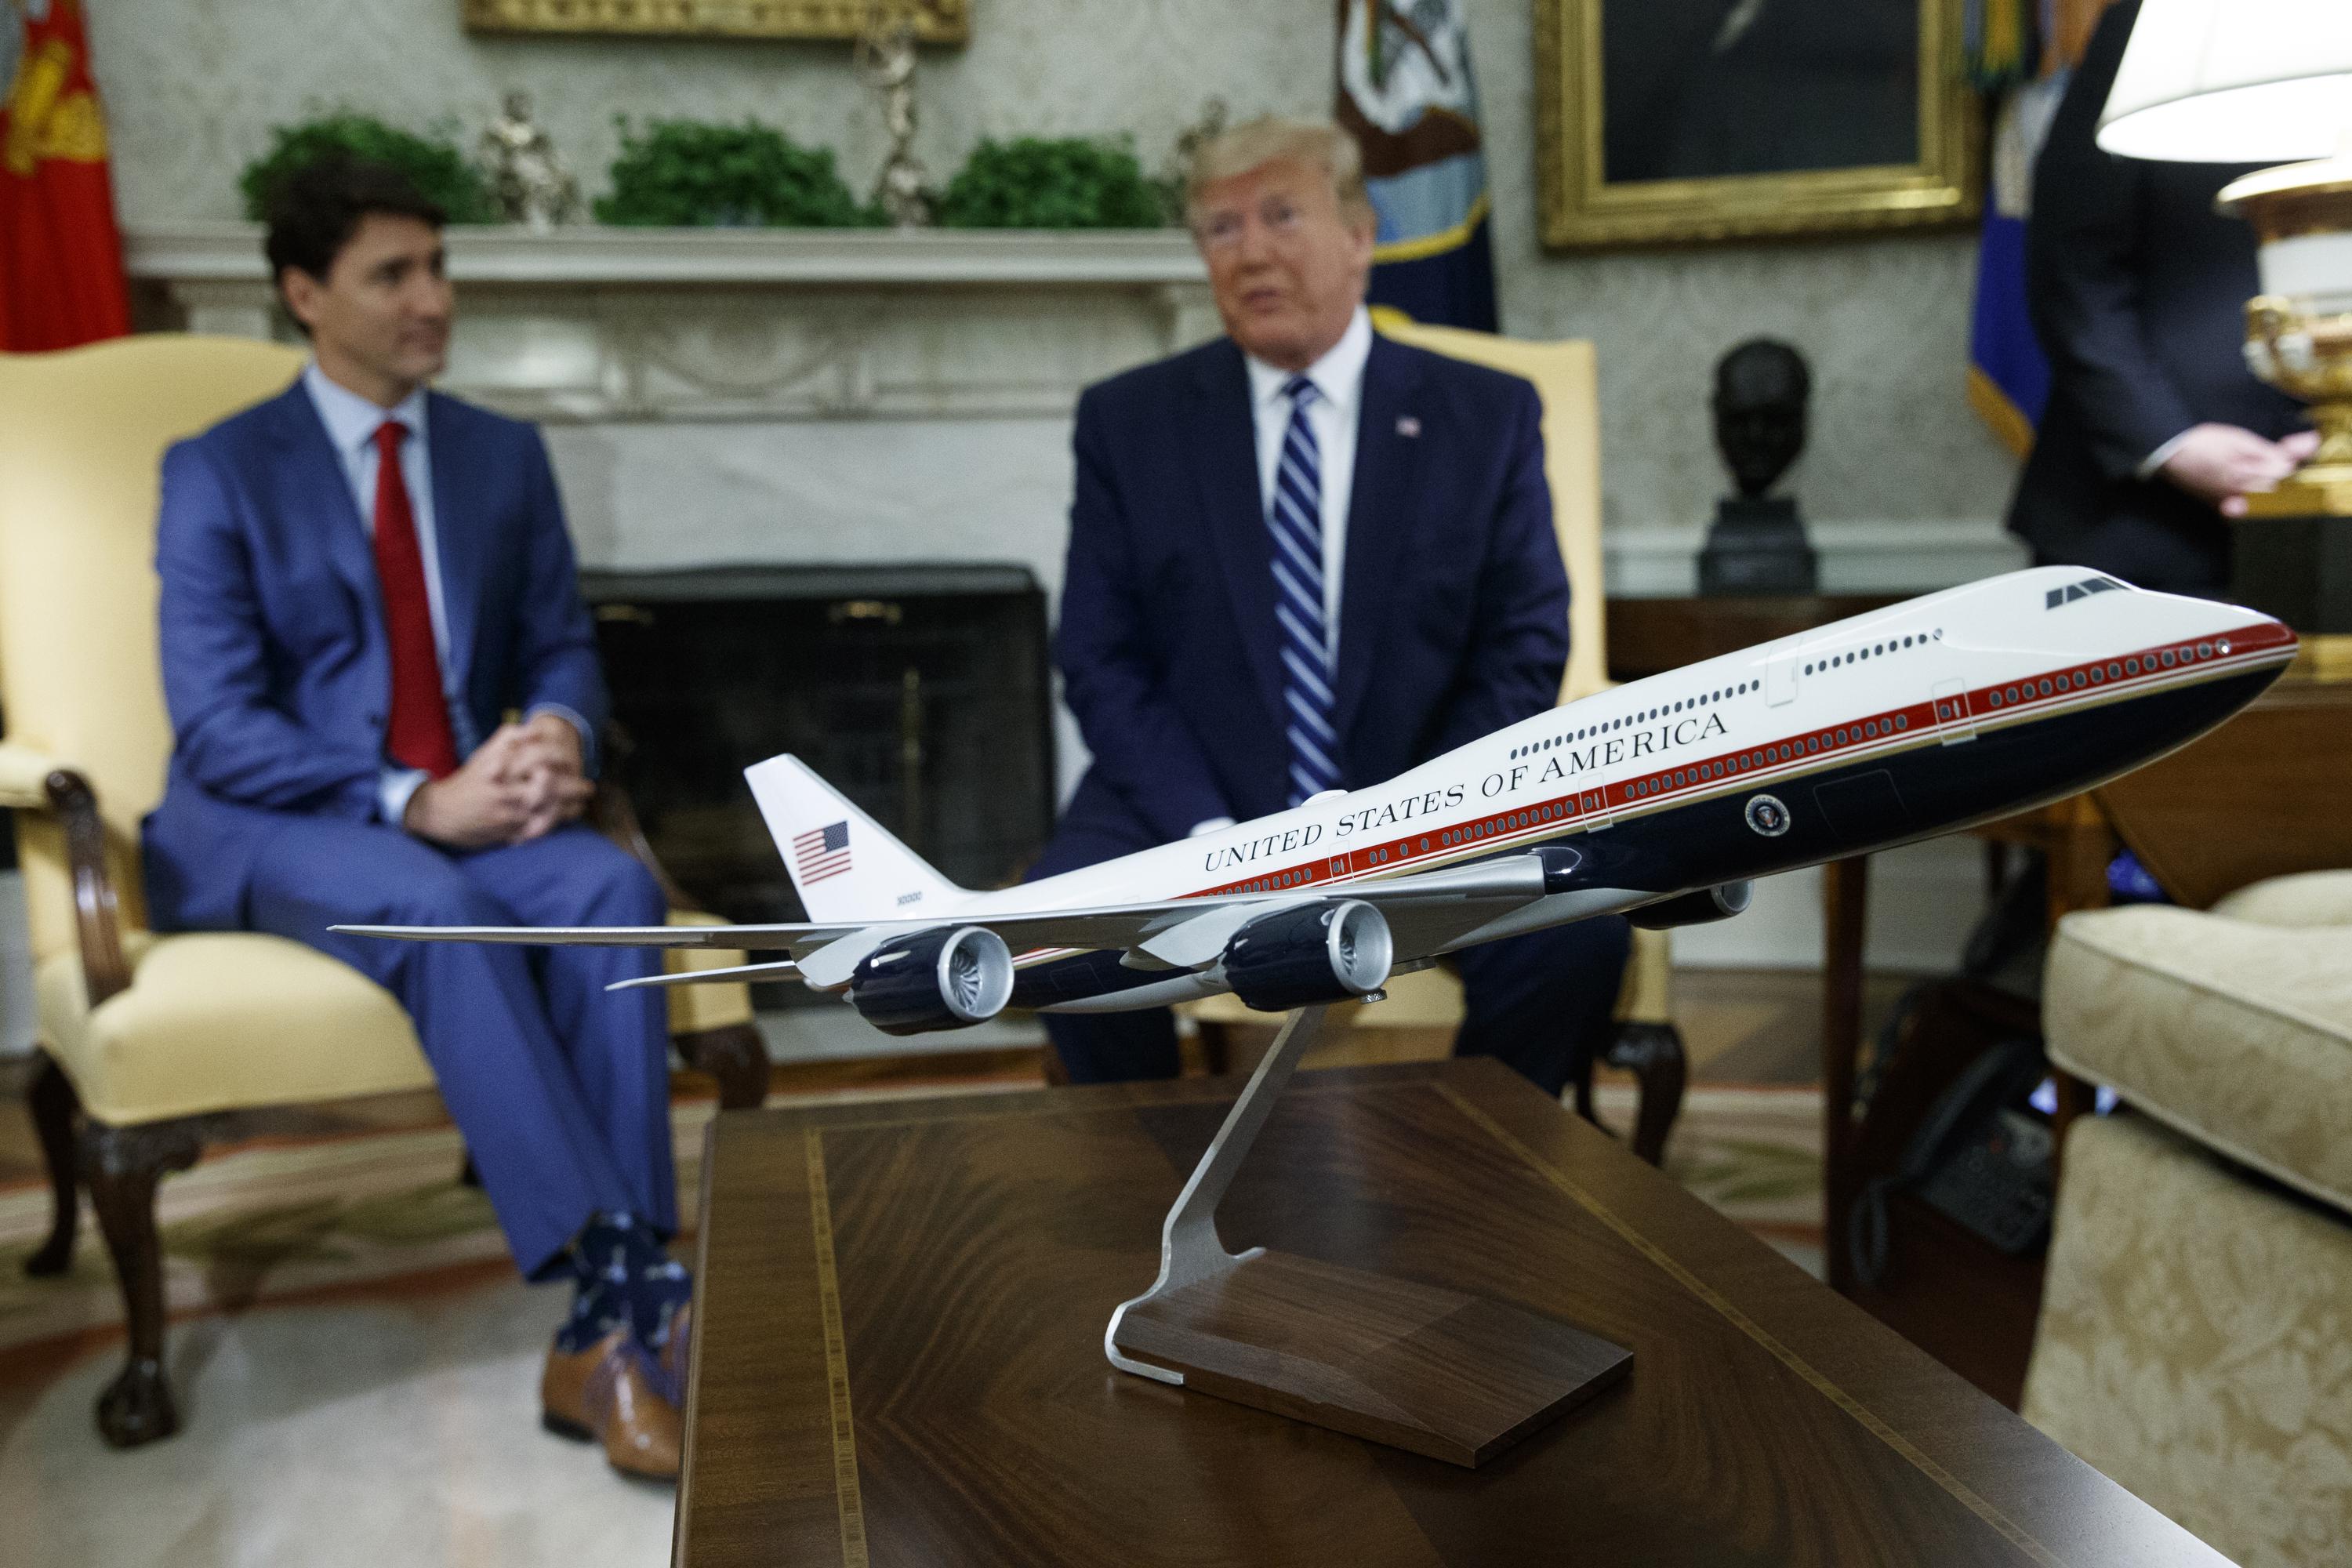 Biden nixes Trump design for Air Force One over cost, delay | AP News